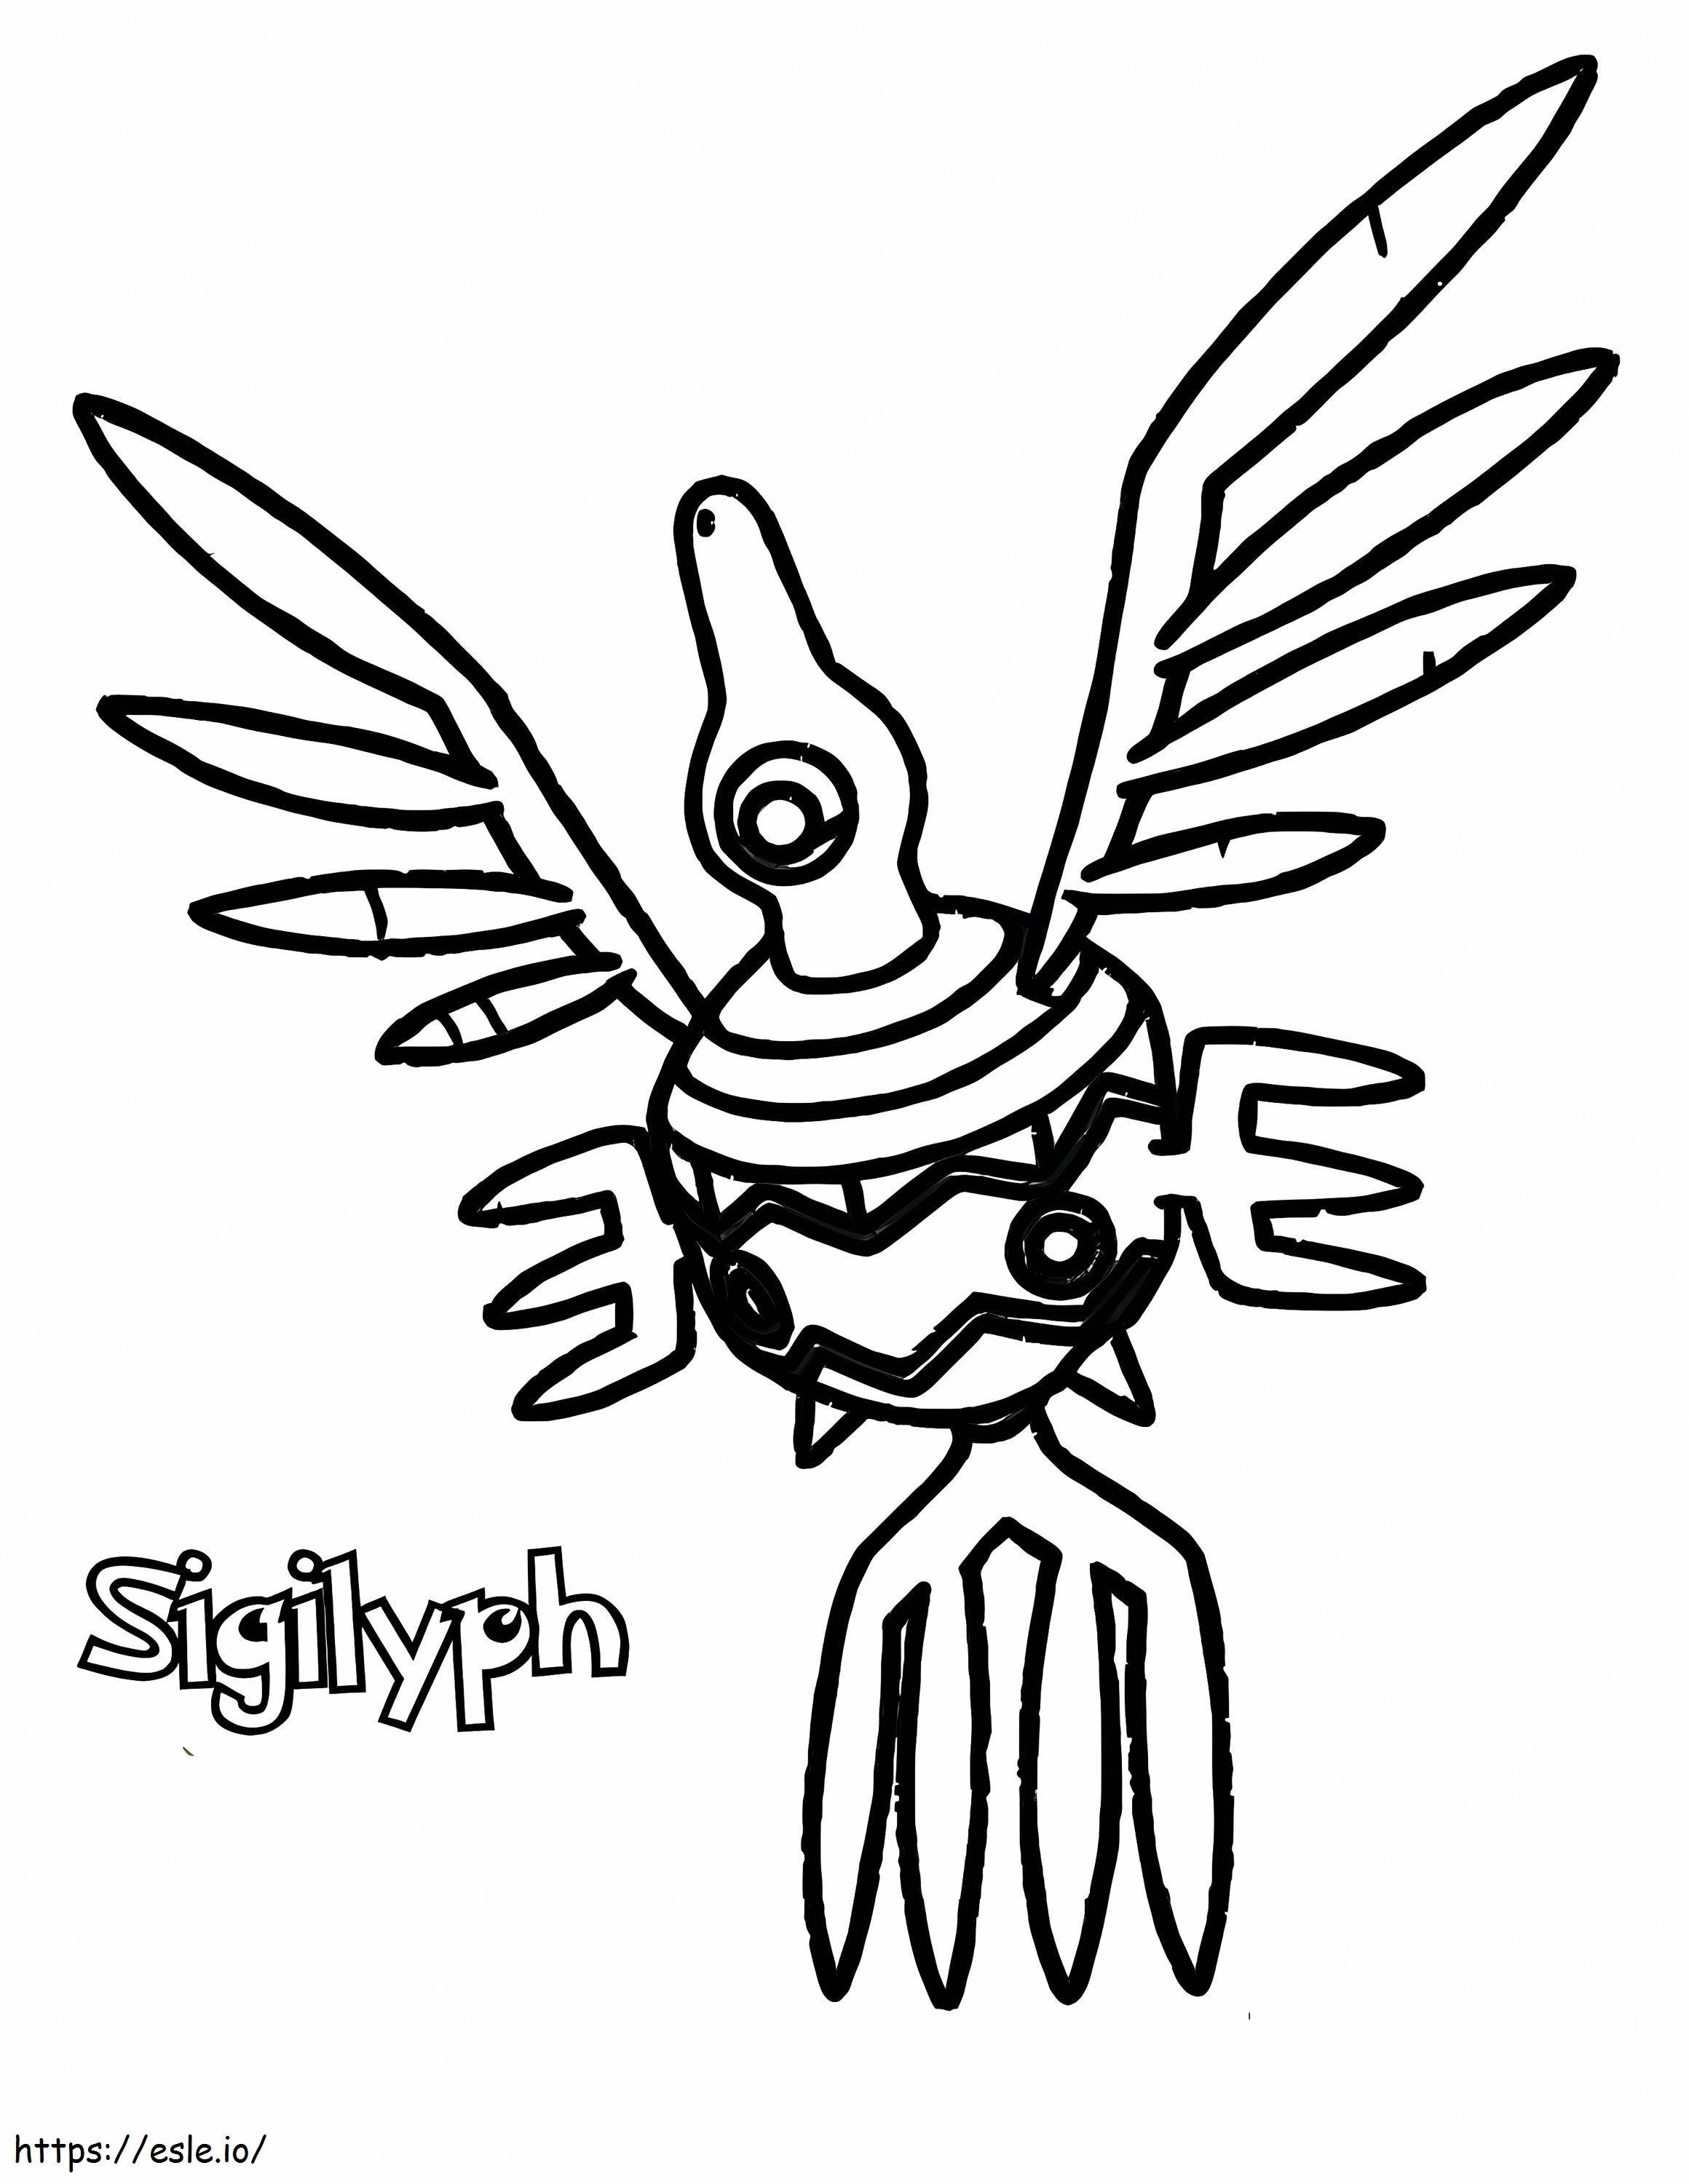 Sigilyph Pokemon coloring page